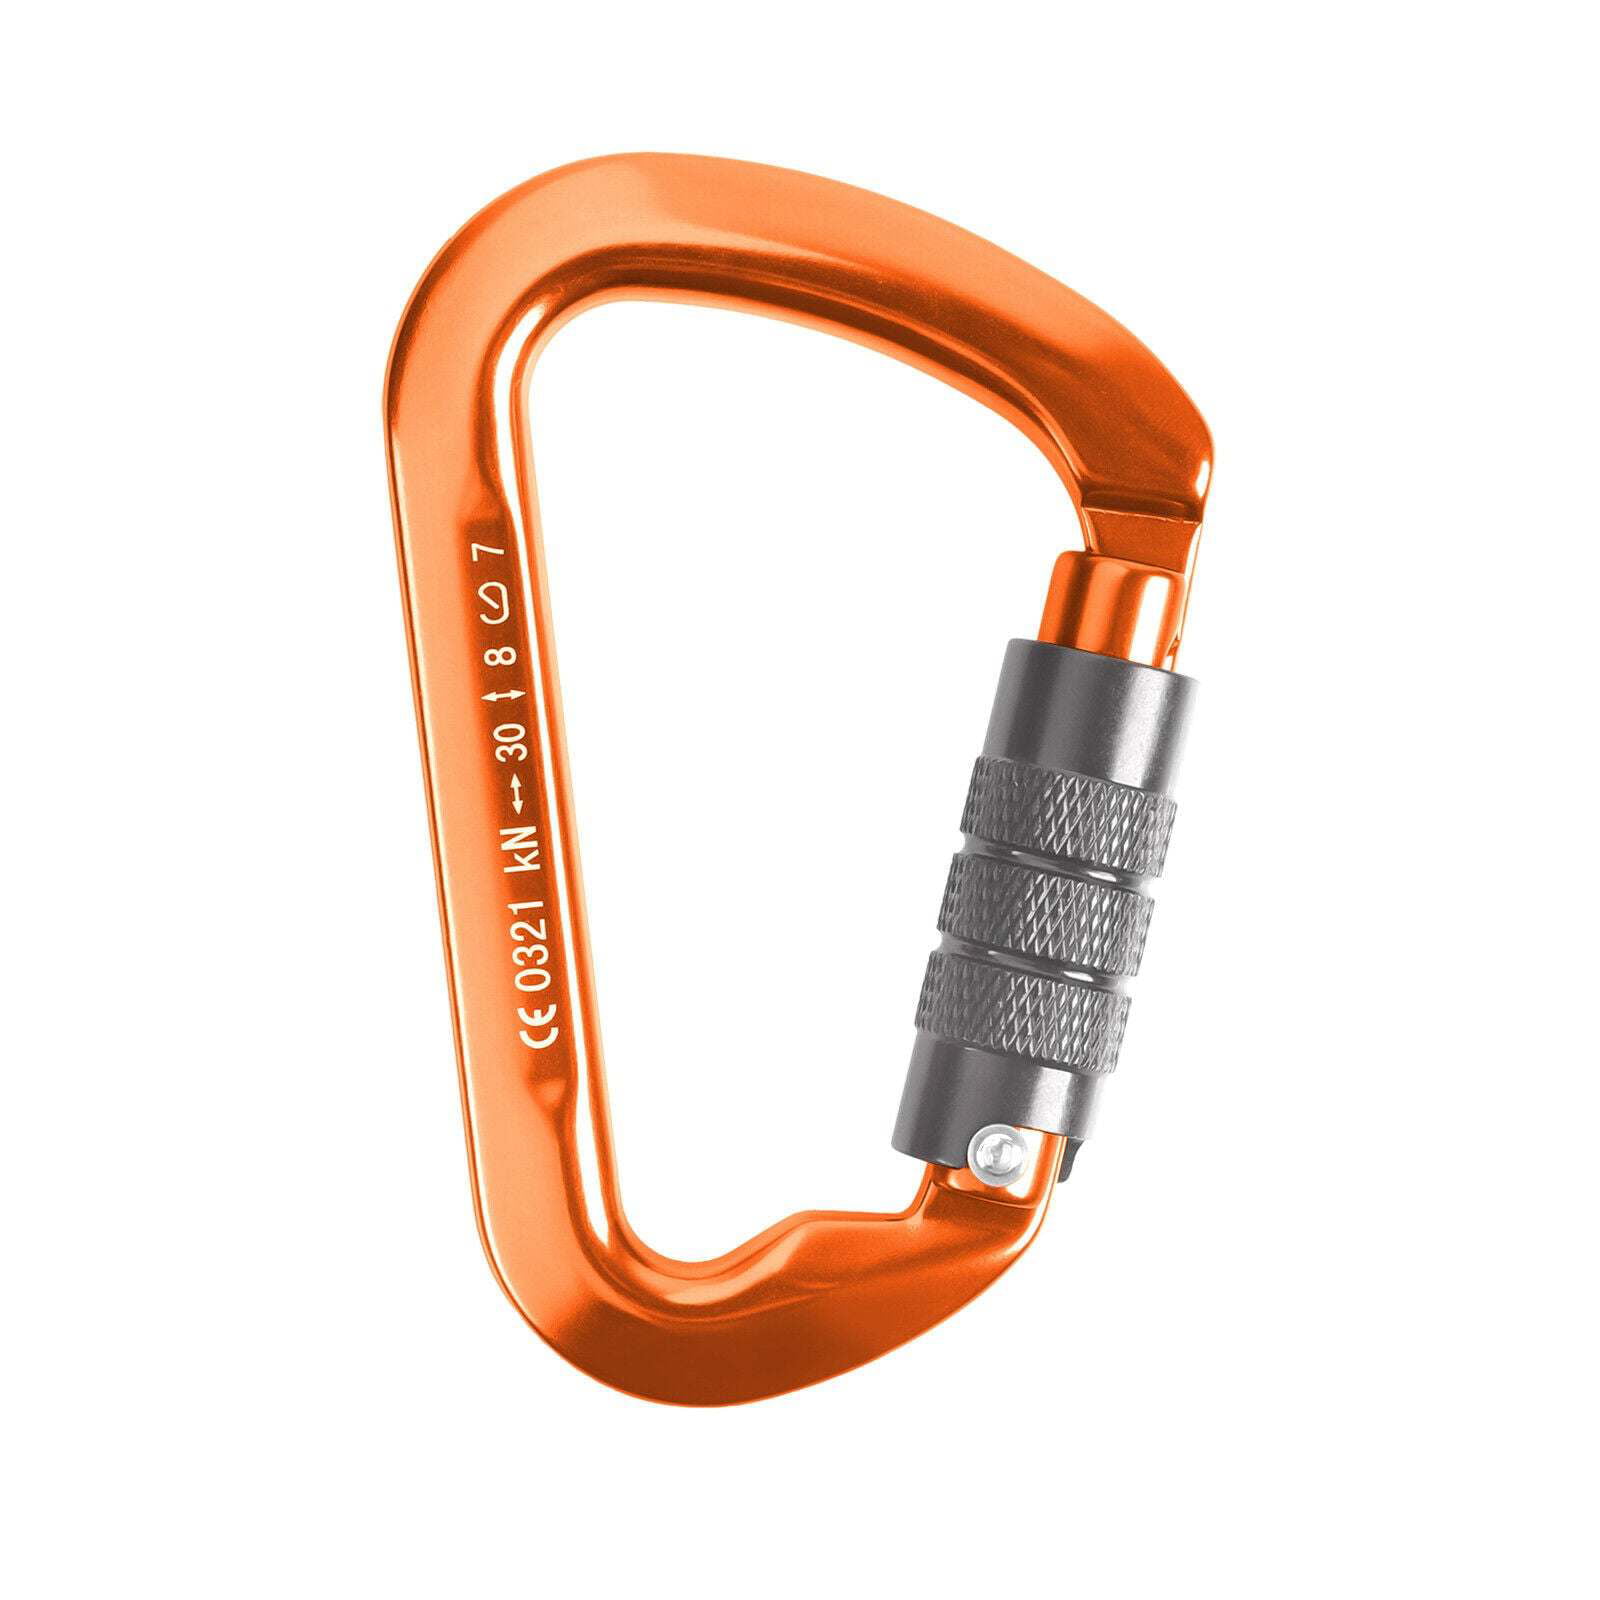 Self D-shape 30KN Aluminum Auto Twist Climbing Locking Carabiner Clip Hook 